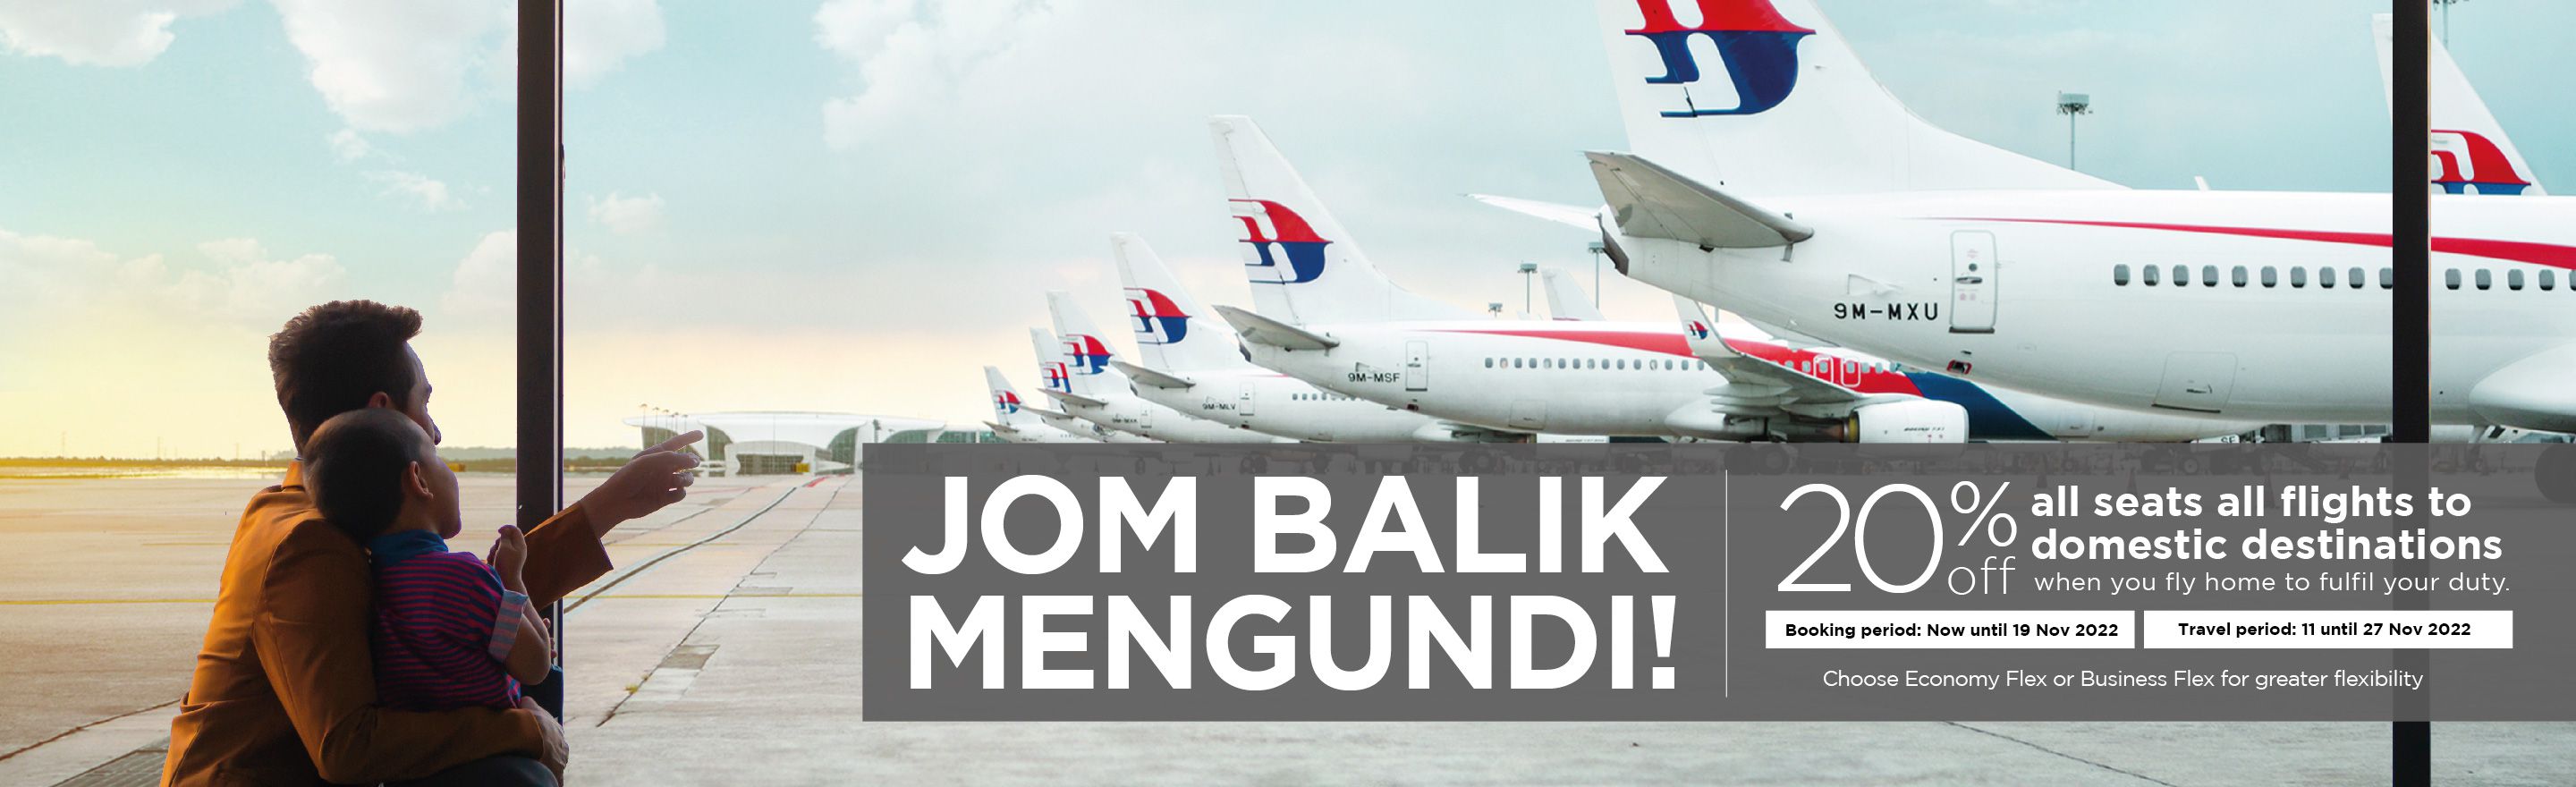 Malaysia Airlines - Jom Balik Mengundi MH jom balik mengundi